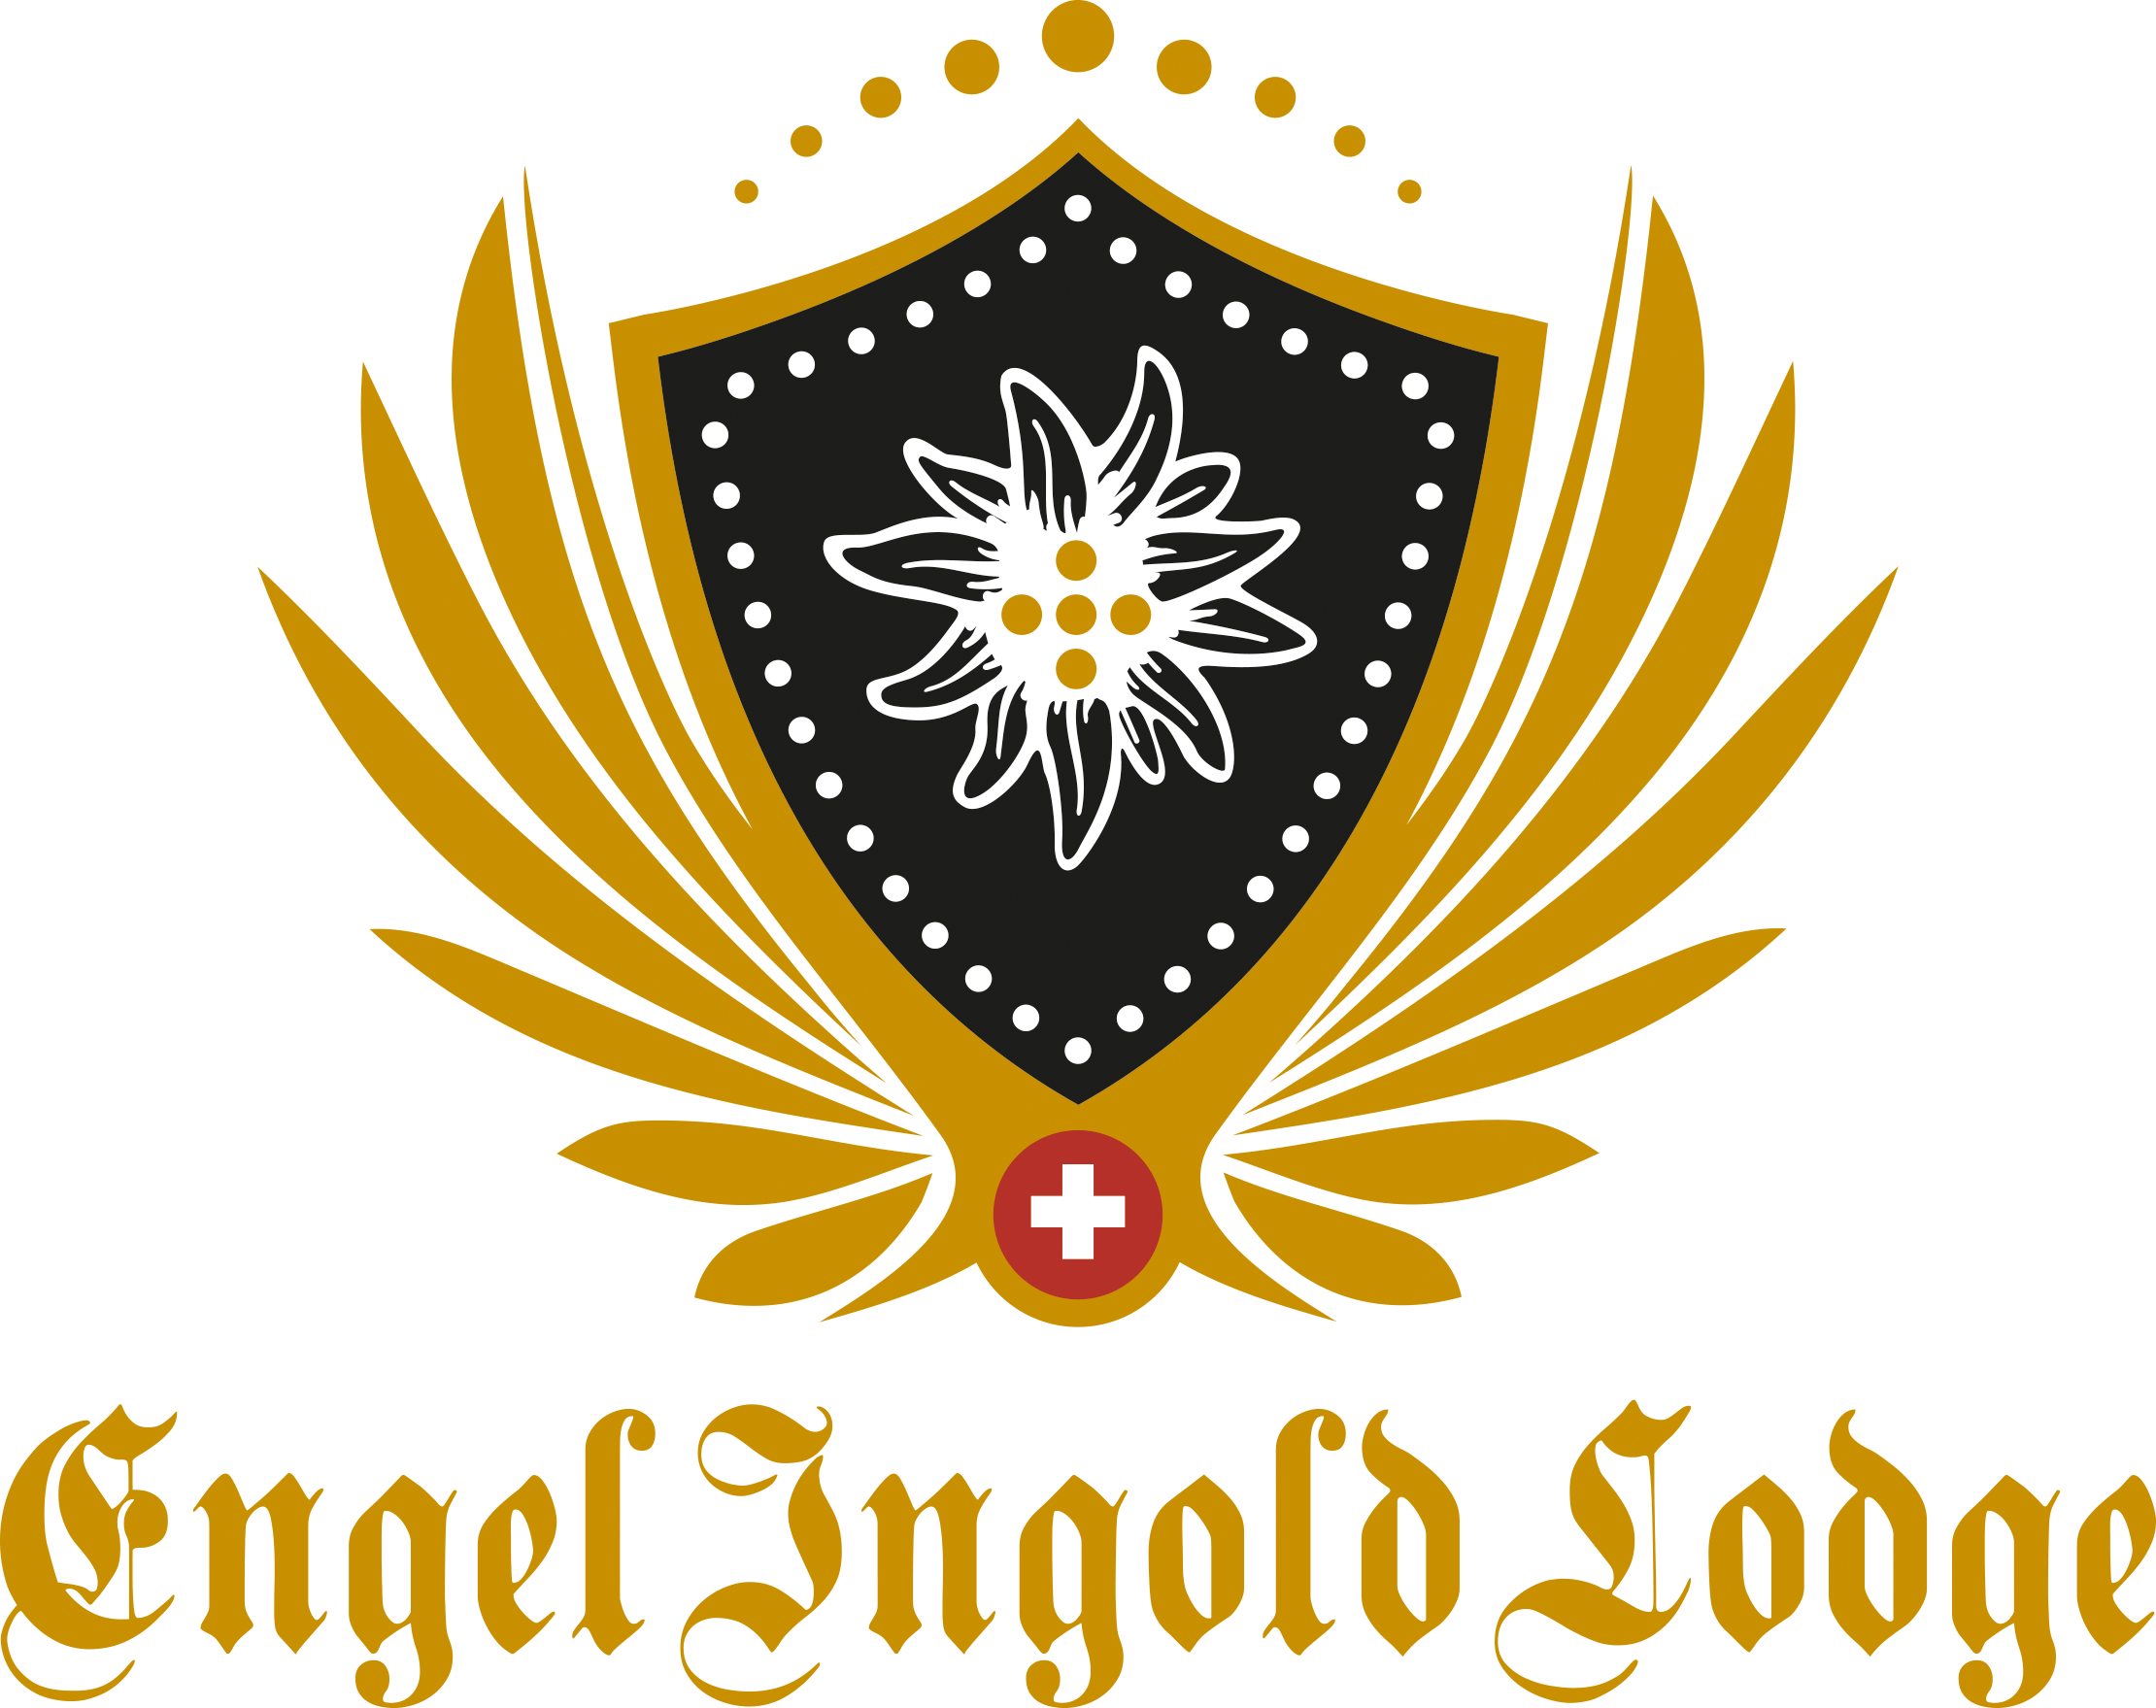 Engel Ingold Lodge Habkern